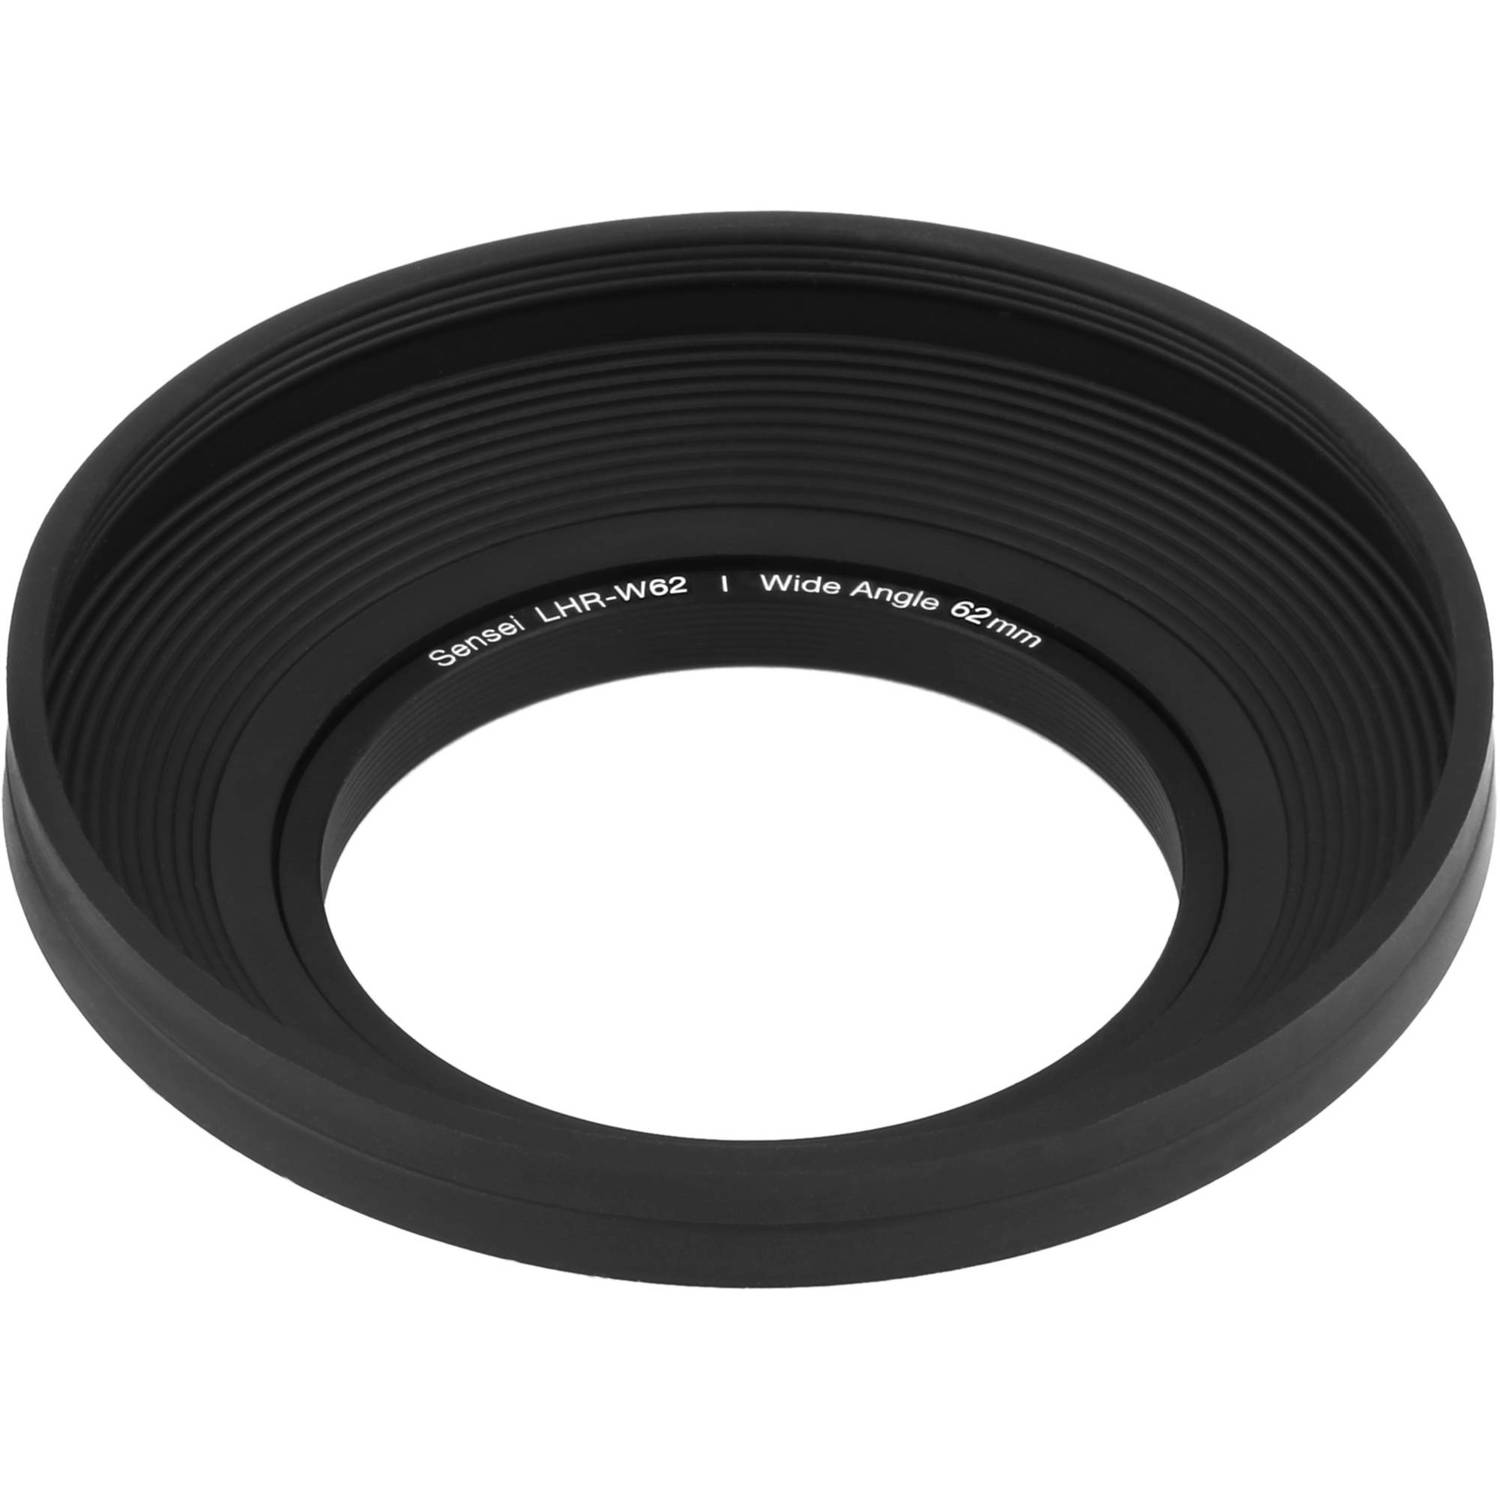 Paraluce di gomma pezzi 77/ mm//3/ sezioni Rubber Lens Hood Sun Shade 77/ mm per obiettivi Zoom da 24/ fino a 210/ mm lunghezza focale